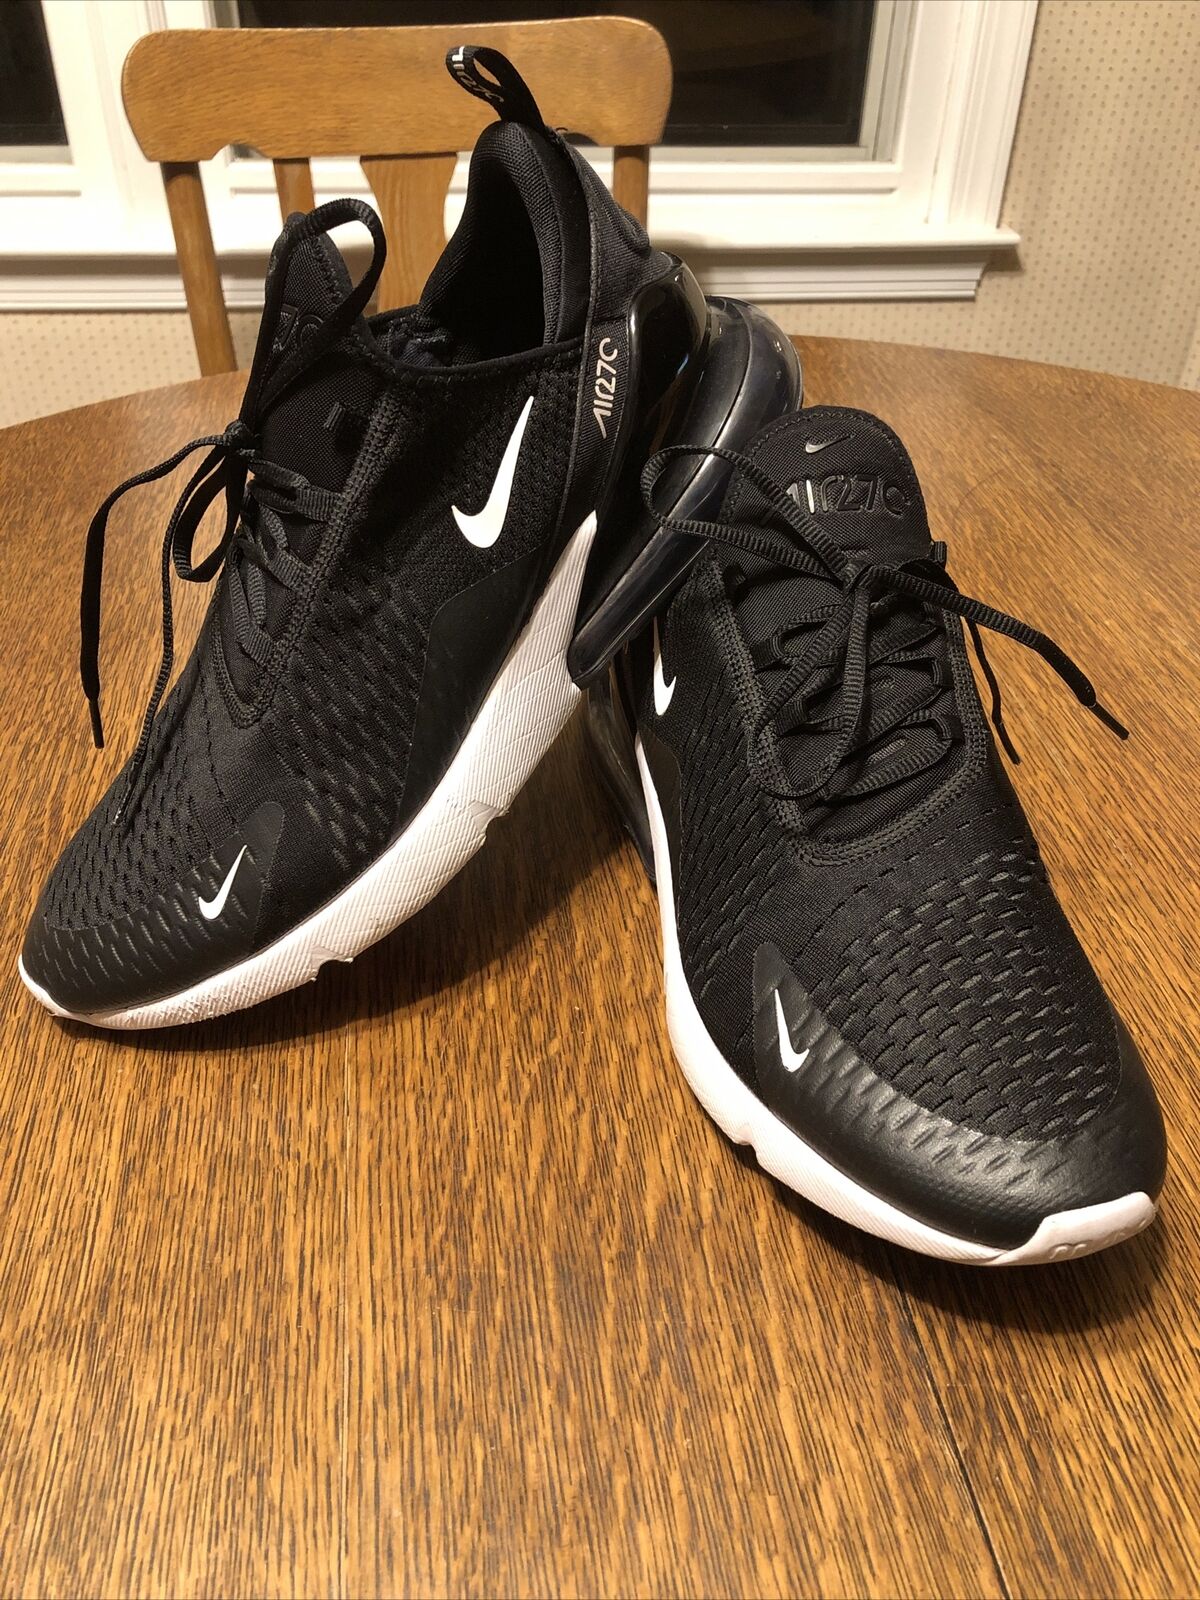 Nike Air Max 270 AH8050-002 Men's Black/White Running Shoes Size 13